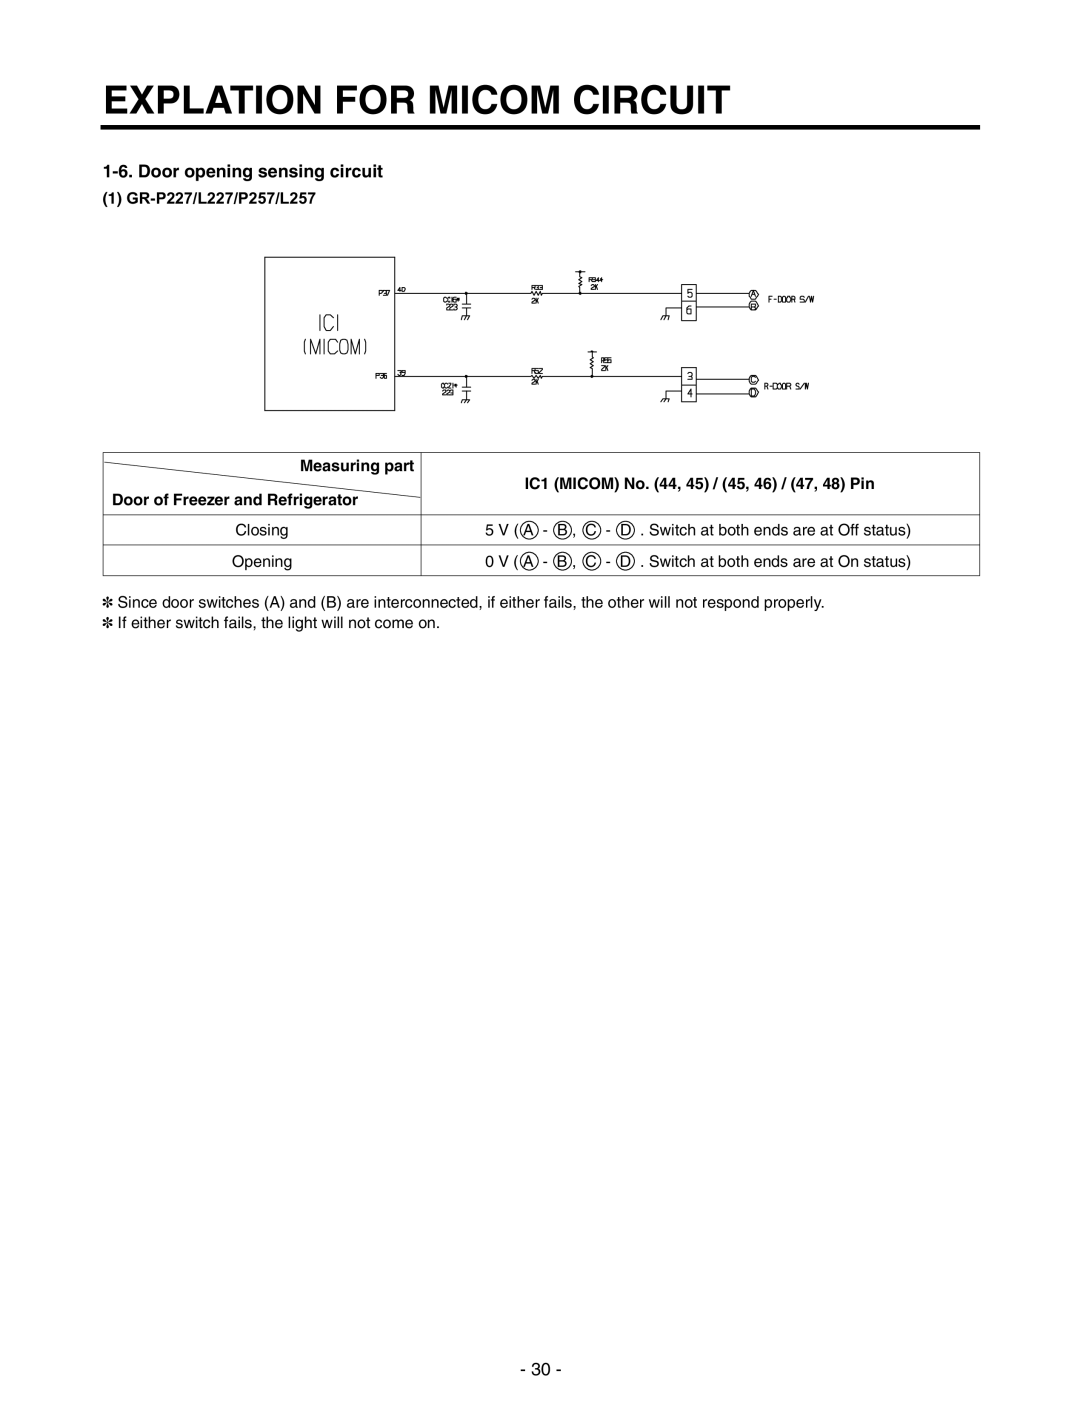 LG Electronics Door opening sensing circuit, Explation For Micom Circuit, GR-P227/L227/P257/L257, Measuring part 